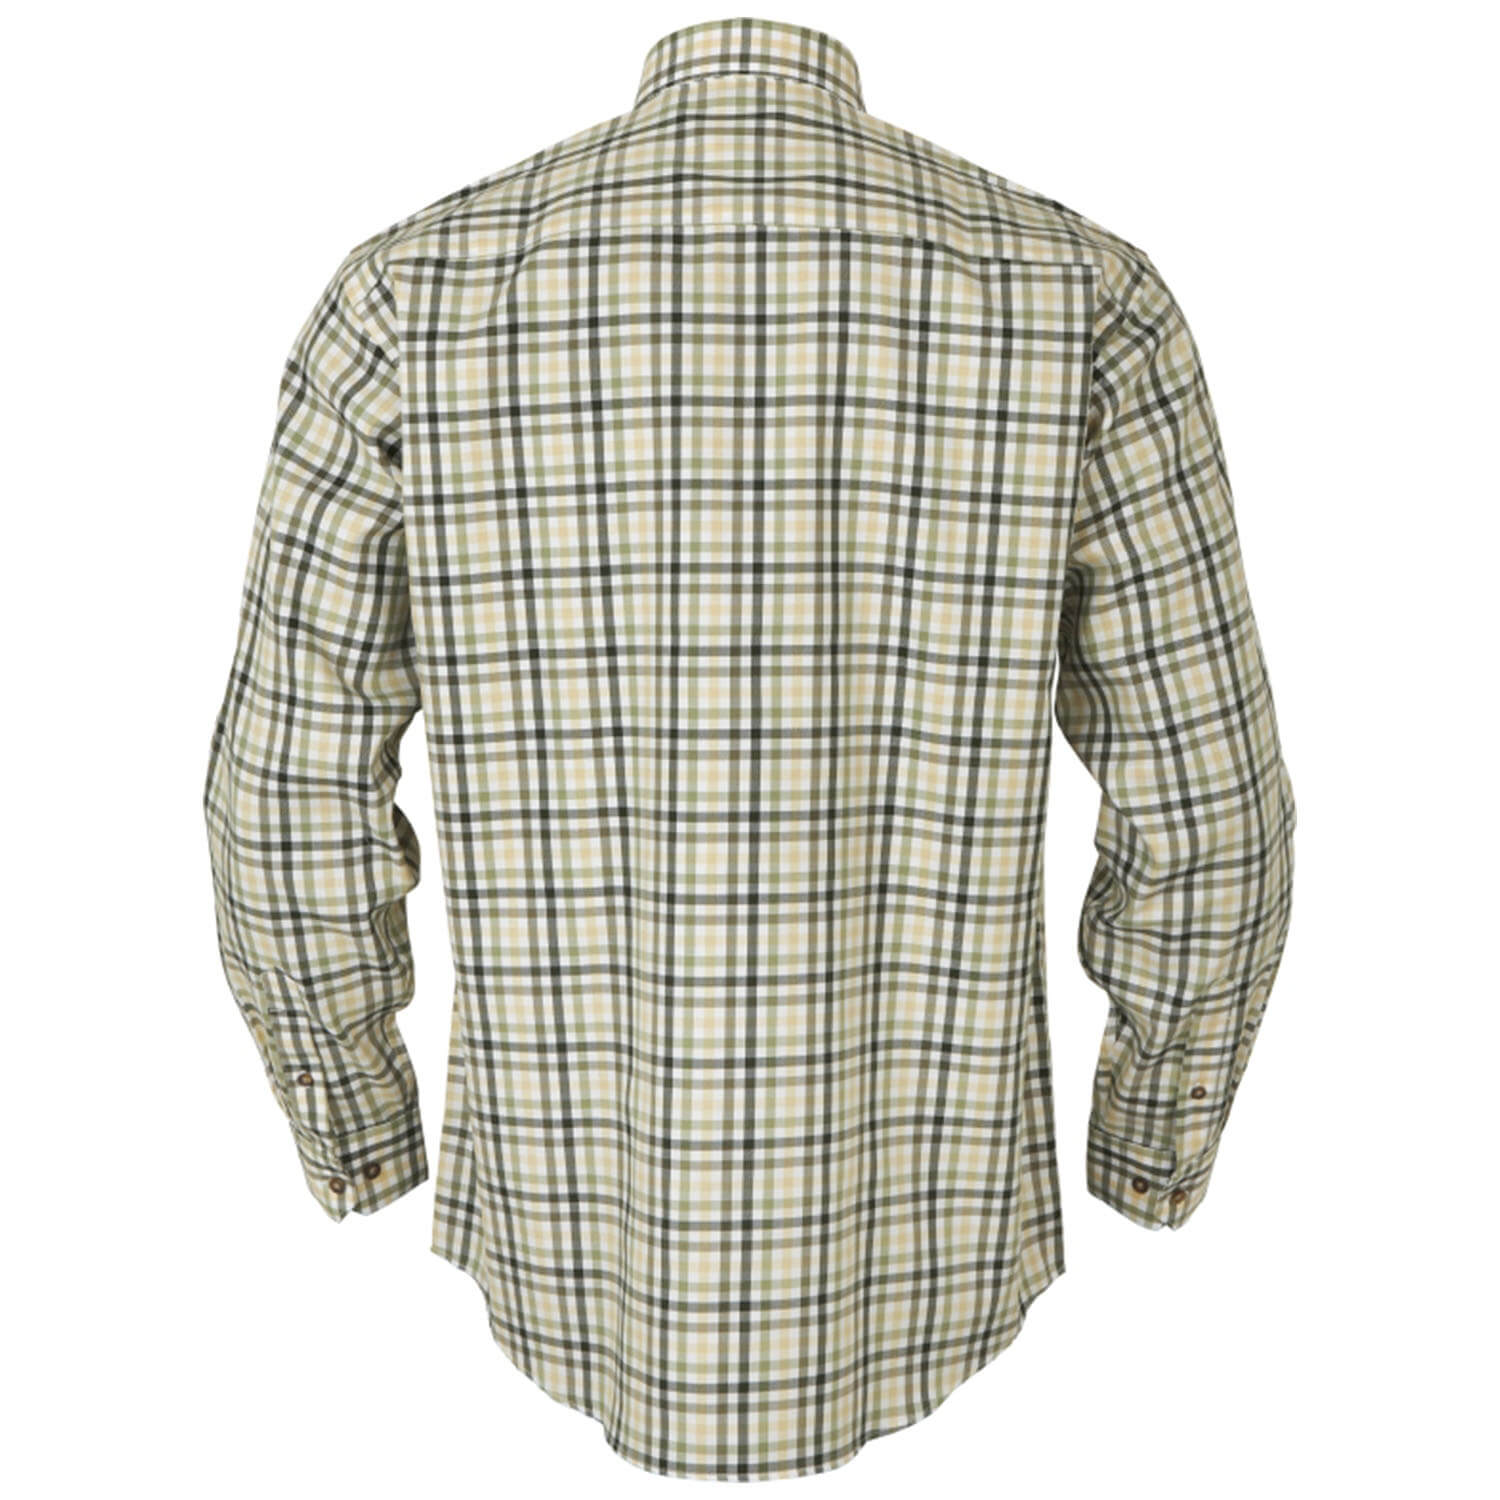 Härkila hunting shirt milford (beech green check)